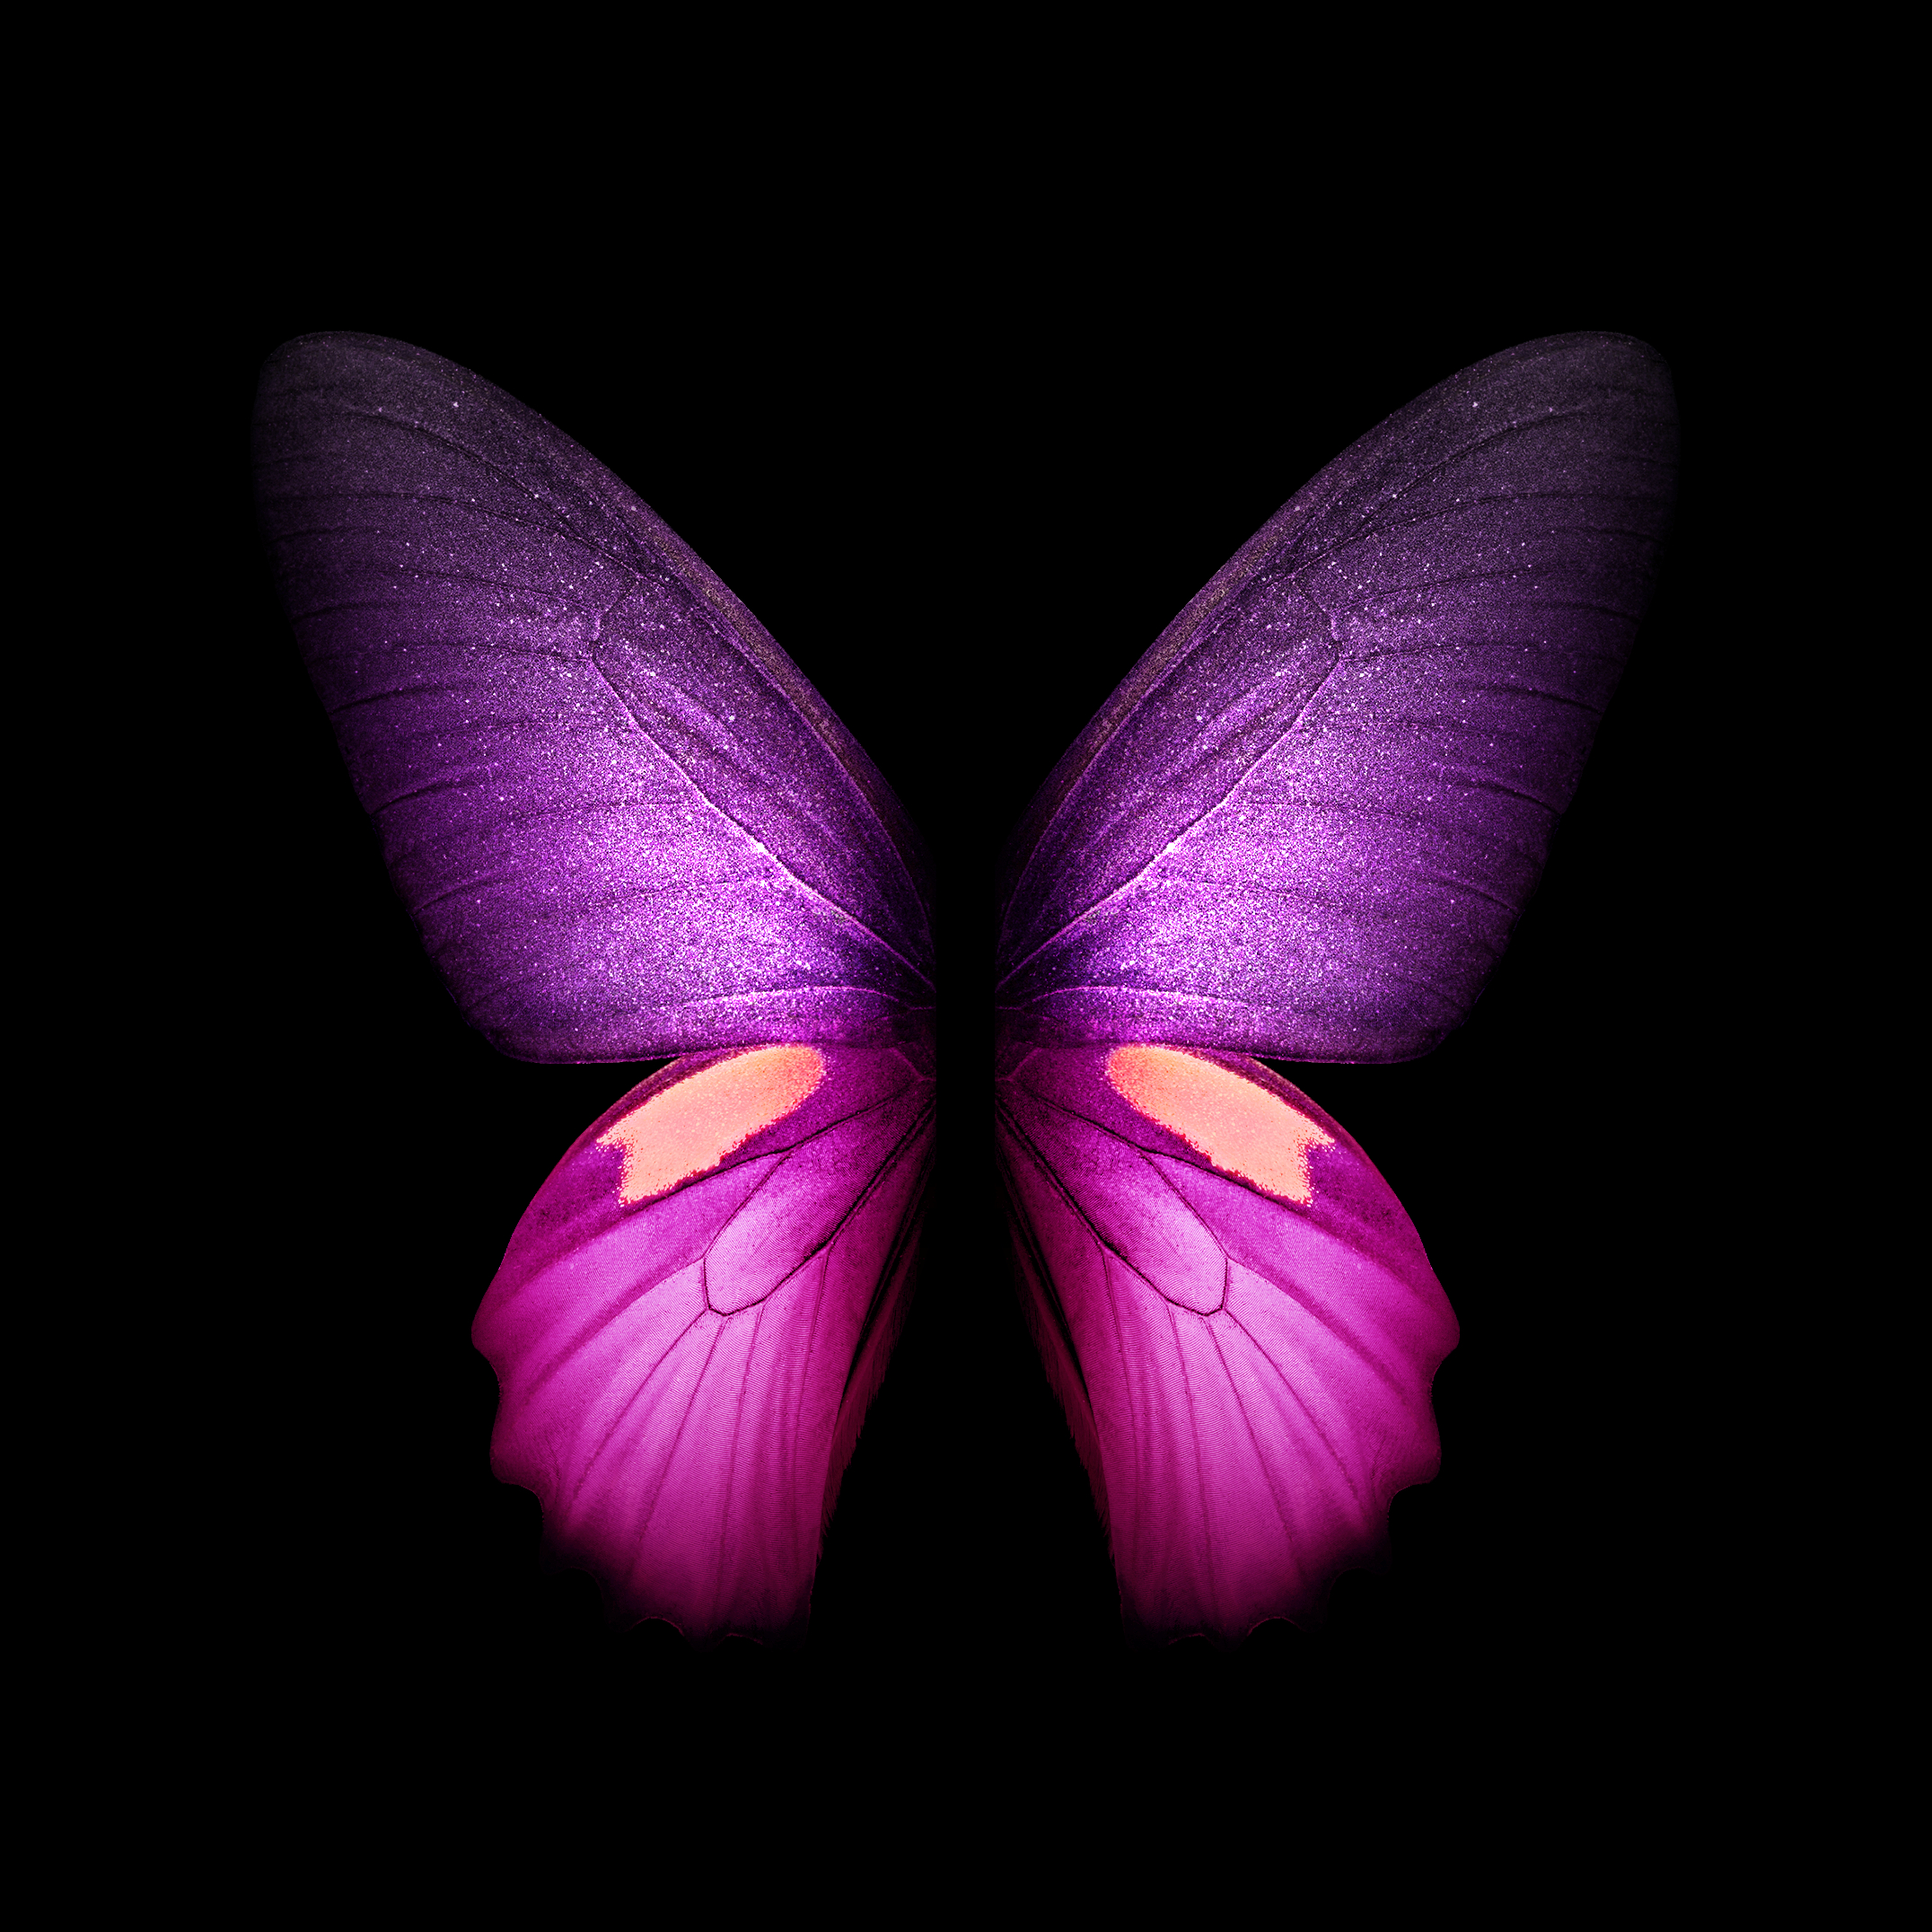 2152x2152 Galaxy Buterfly Wallpapers On | Purple butterfly wallpaper, Teal and black wallpaper, Butterfly inspirati